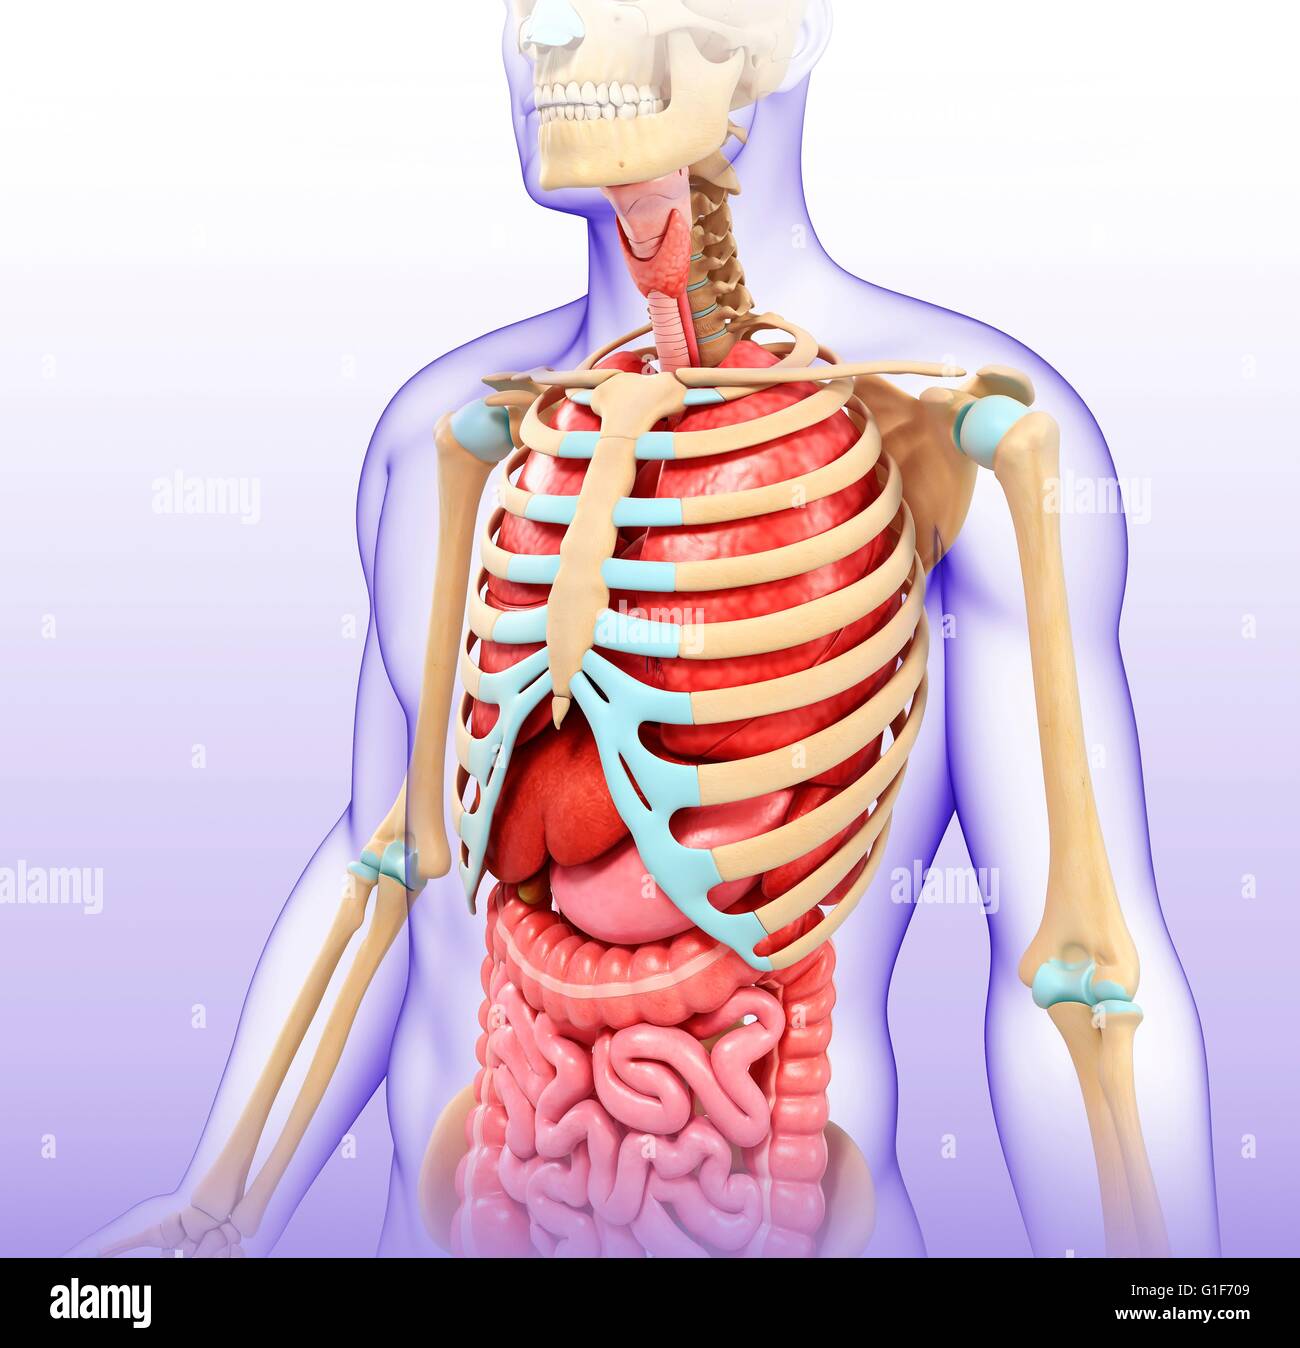 Anatomy of the human chest, illustration Stock Photo - Alamy